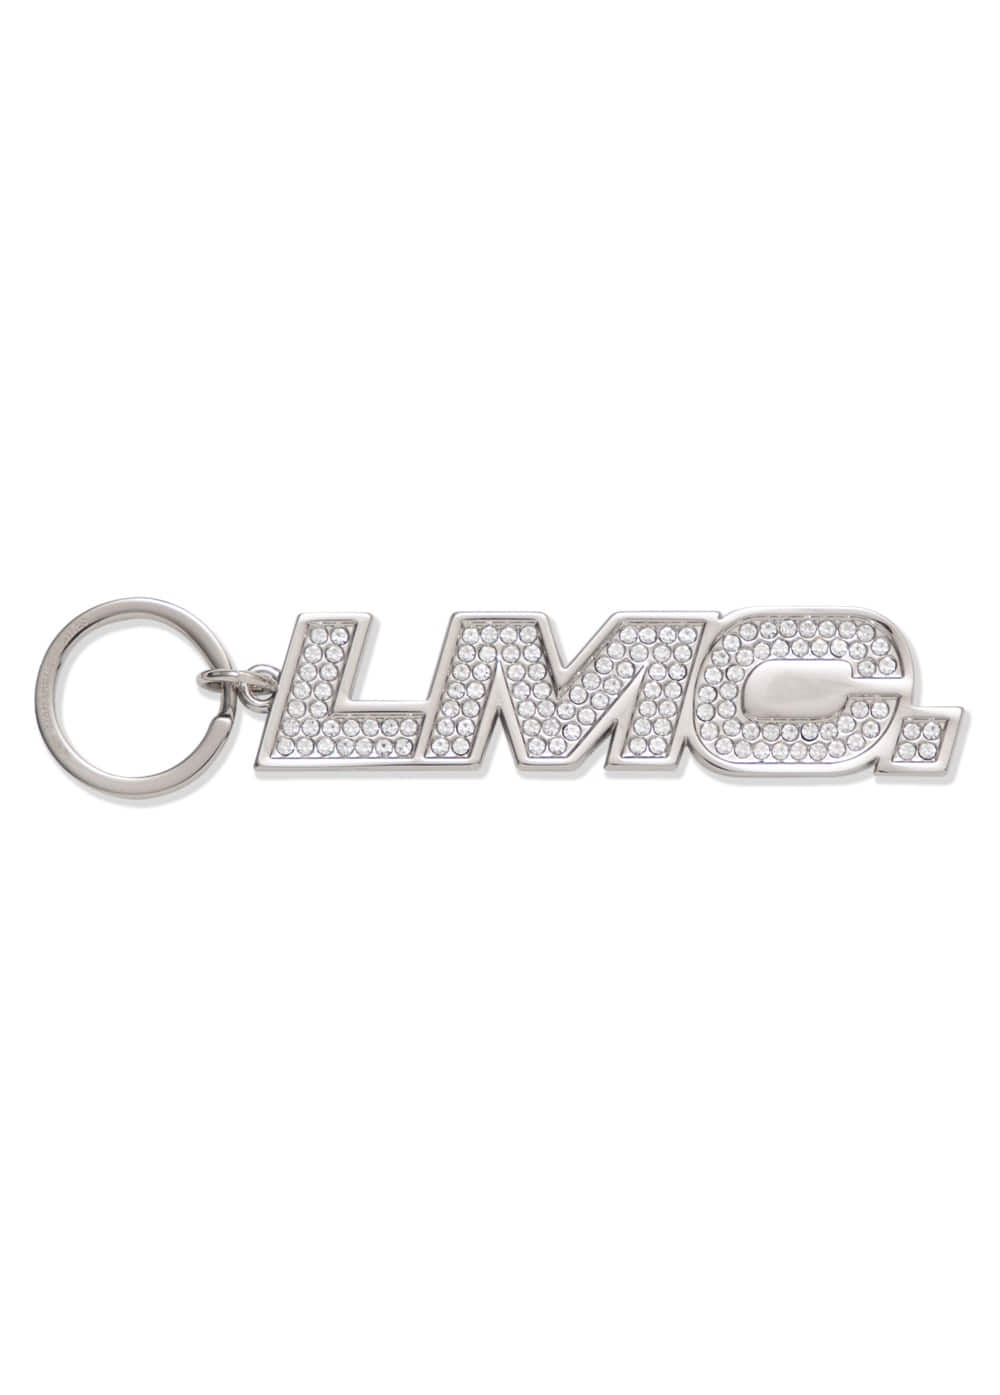 LMC CUBIC KEYRING silver